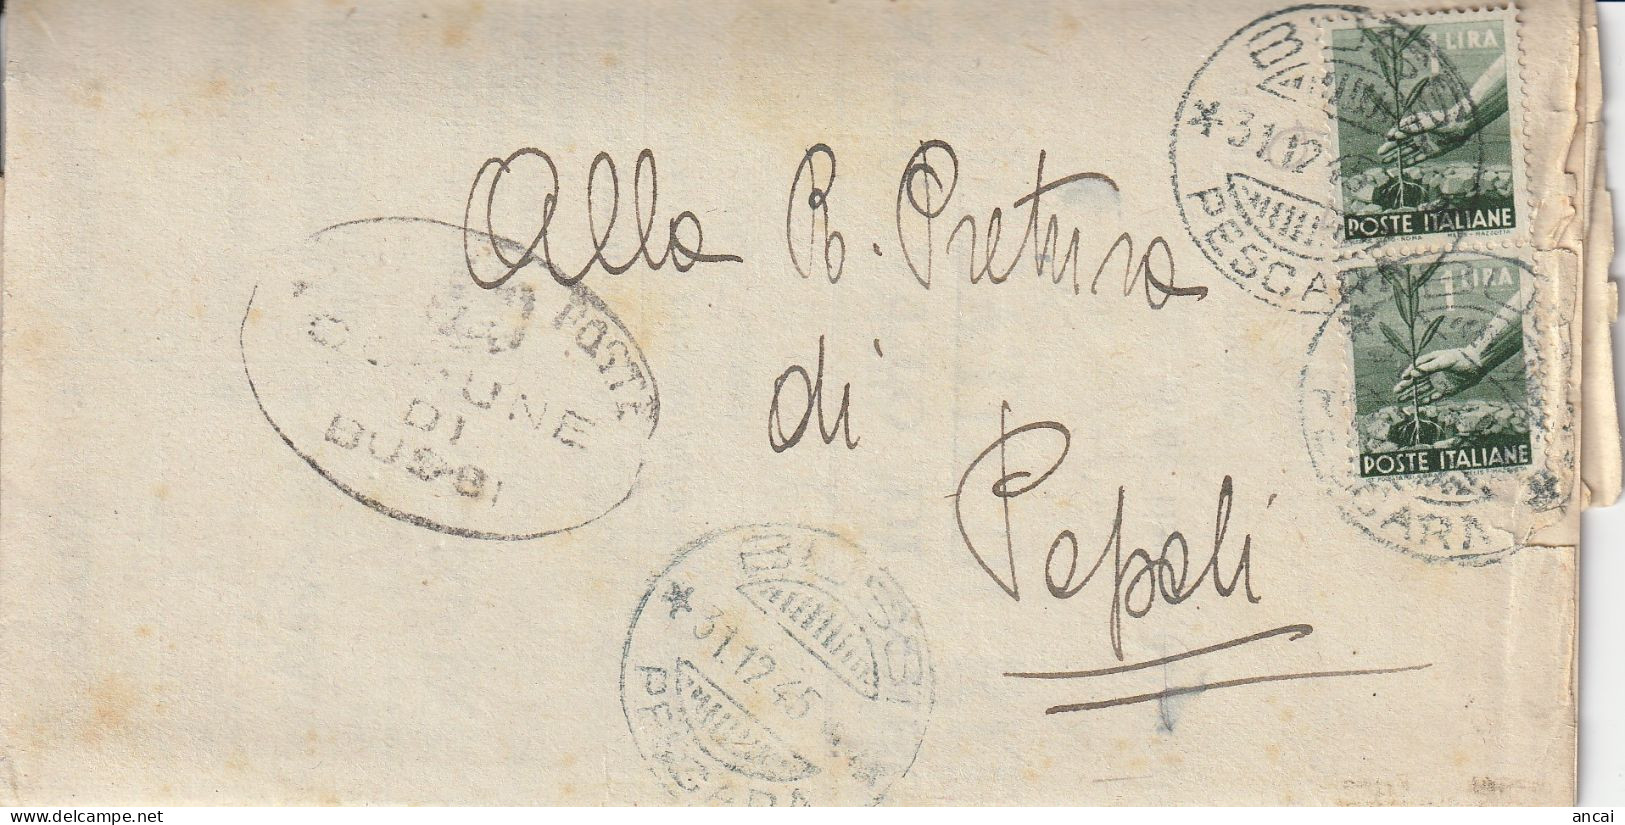 Italy. A163. Bussi. 1945. Stampe Da BUSSI *PESCARA* Per Popoli.  Democratica L. 1 X 2 - Paketmarken